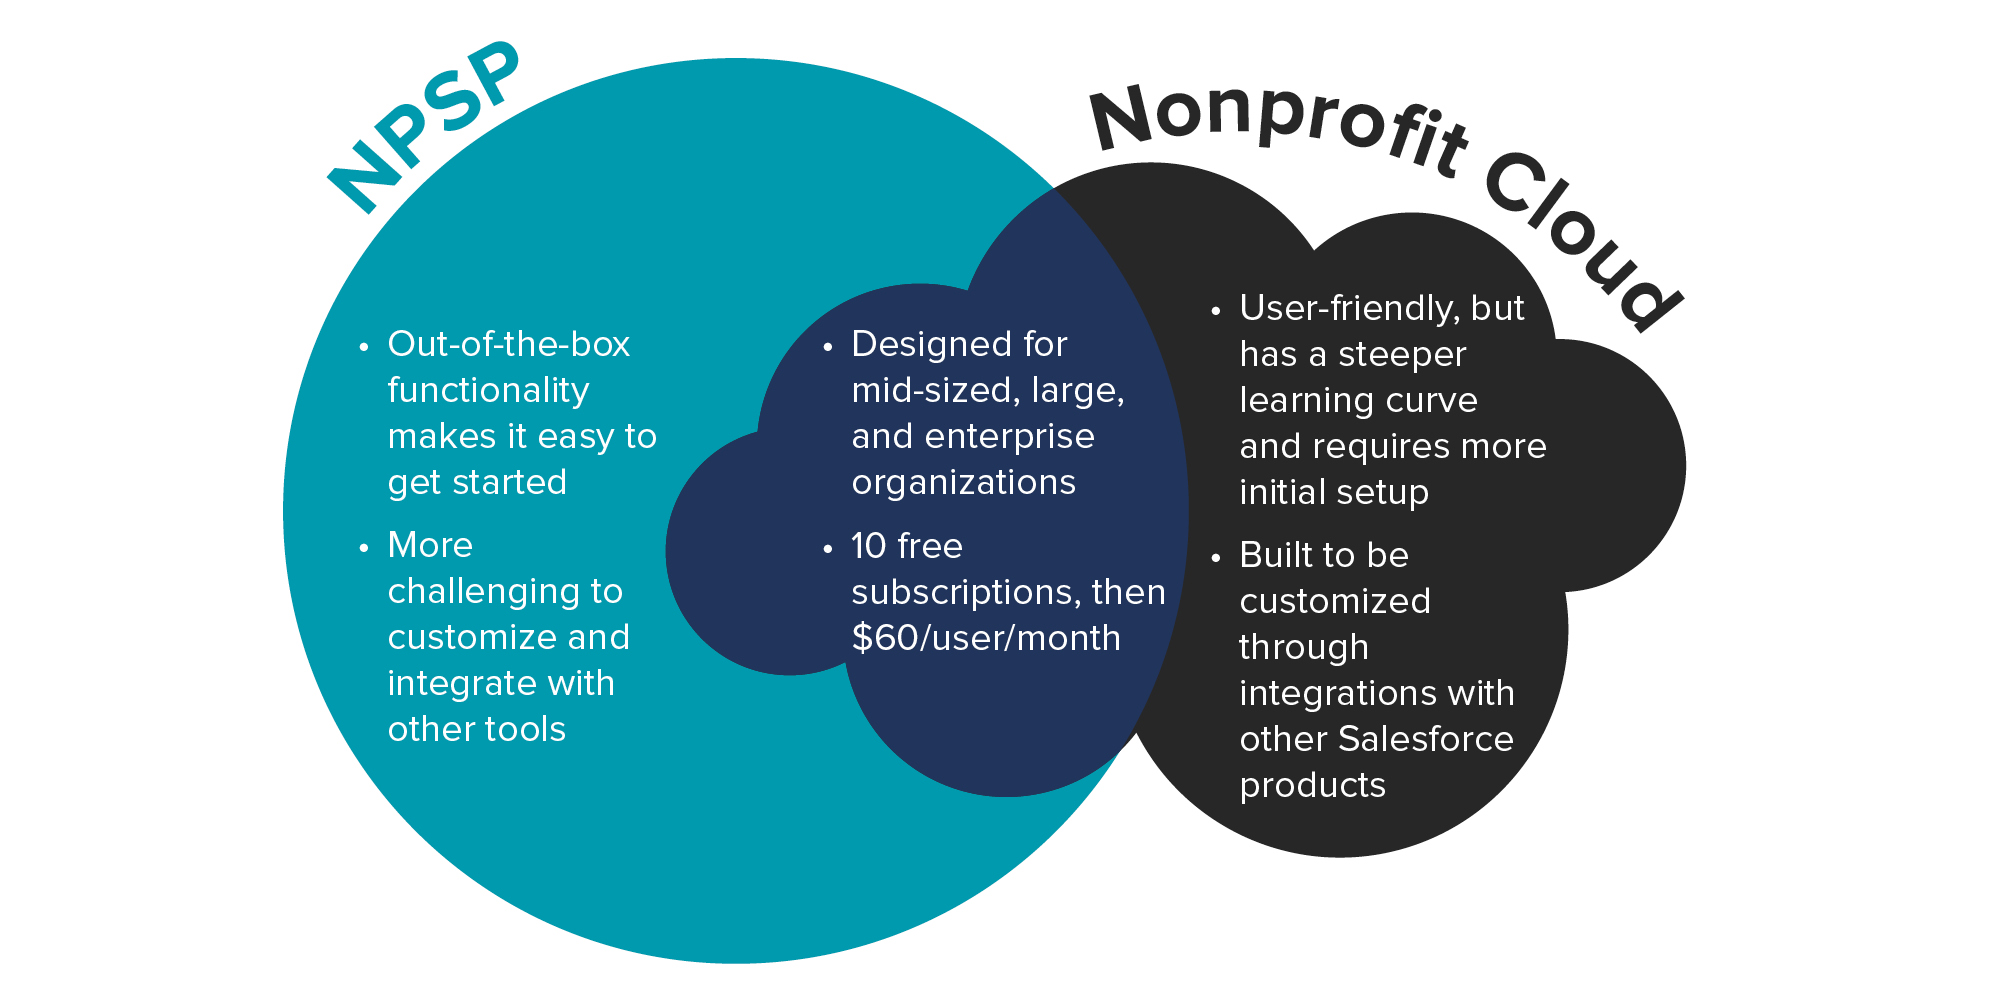 Venn diagram comparing Nonprofit Cloud and NPSP